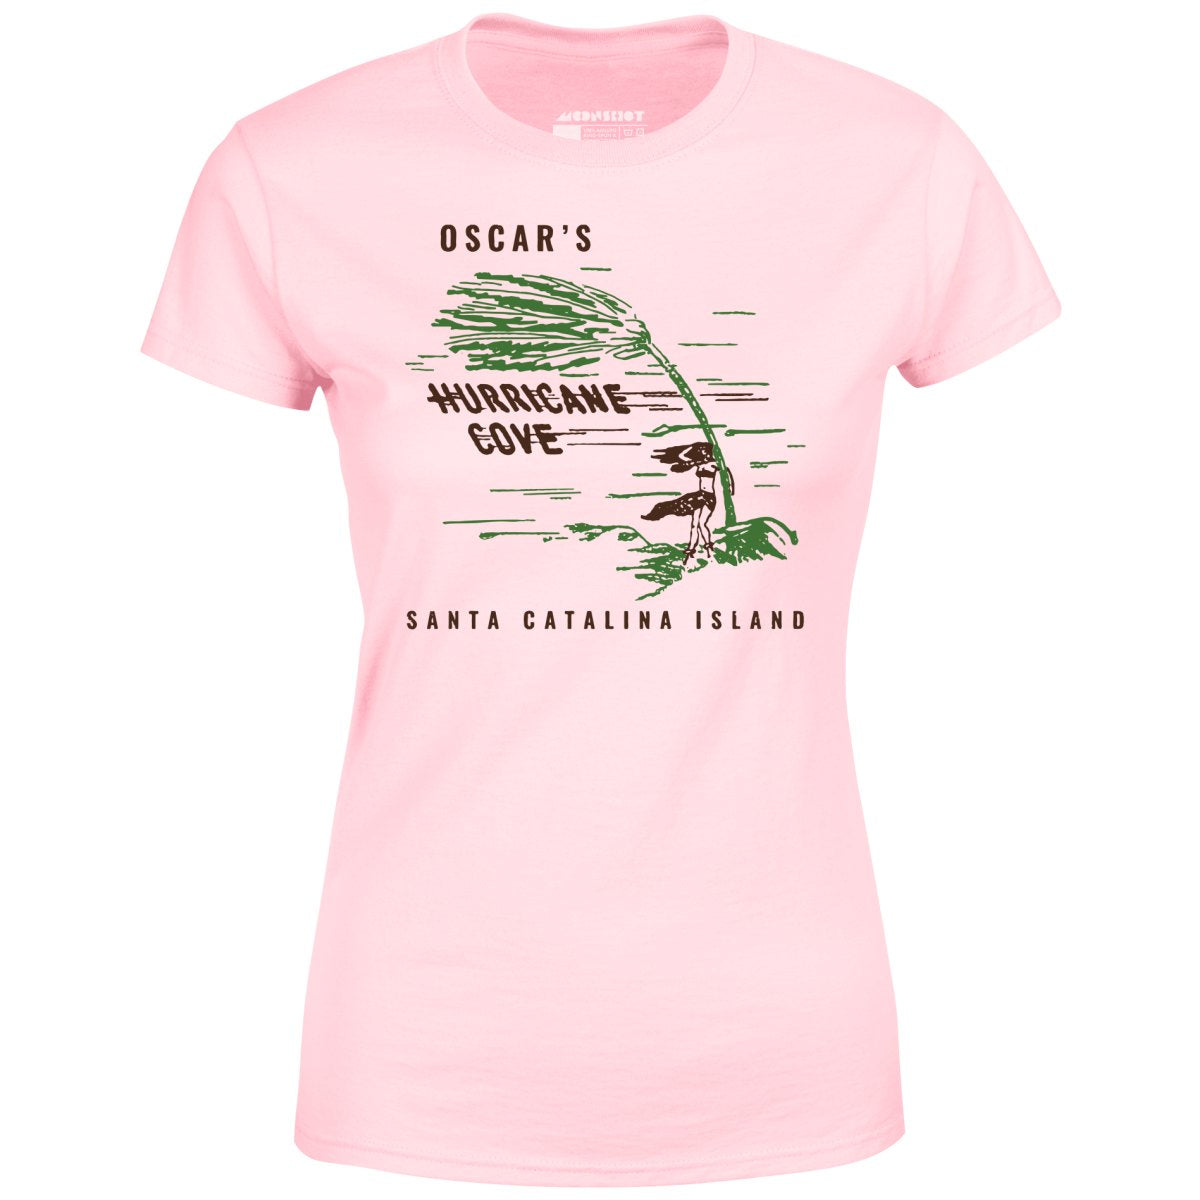 Oscar's Hurricane Cove - Catalina Island, CA - Vintage Tiki Bar - Women's T-Shirt